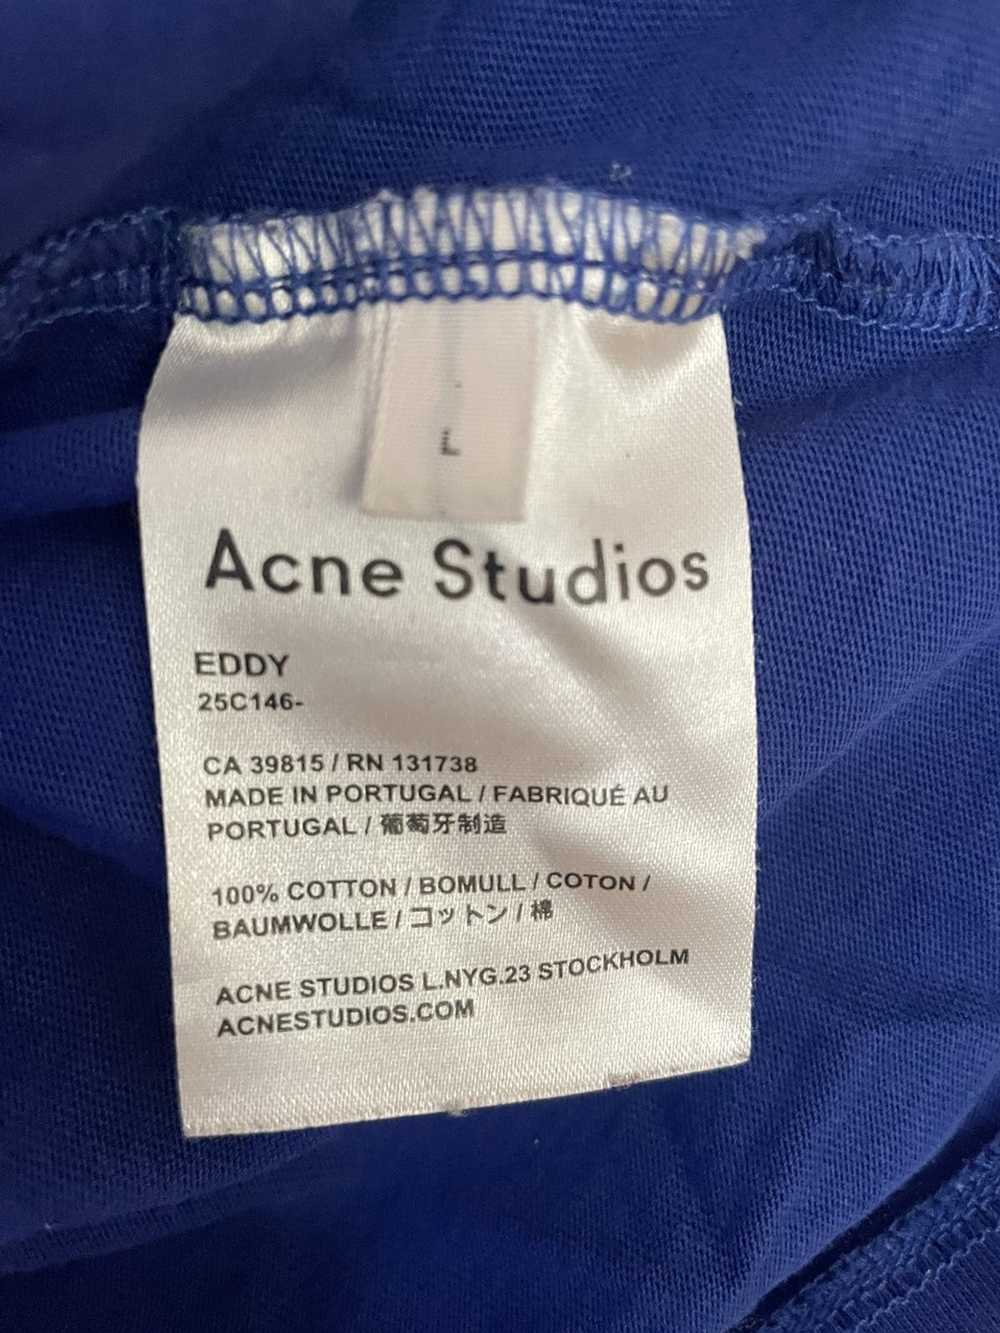 Acne Studios Acne Srudios Blue Eddy Shirt - image 4